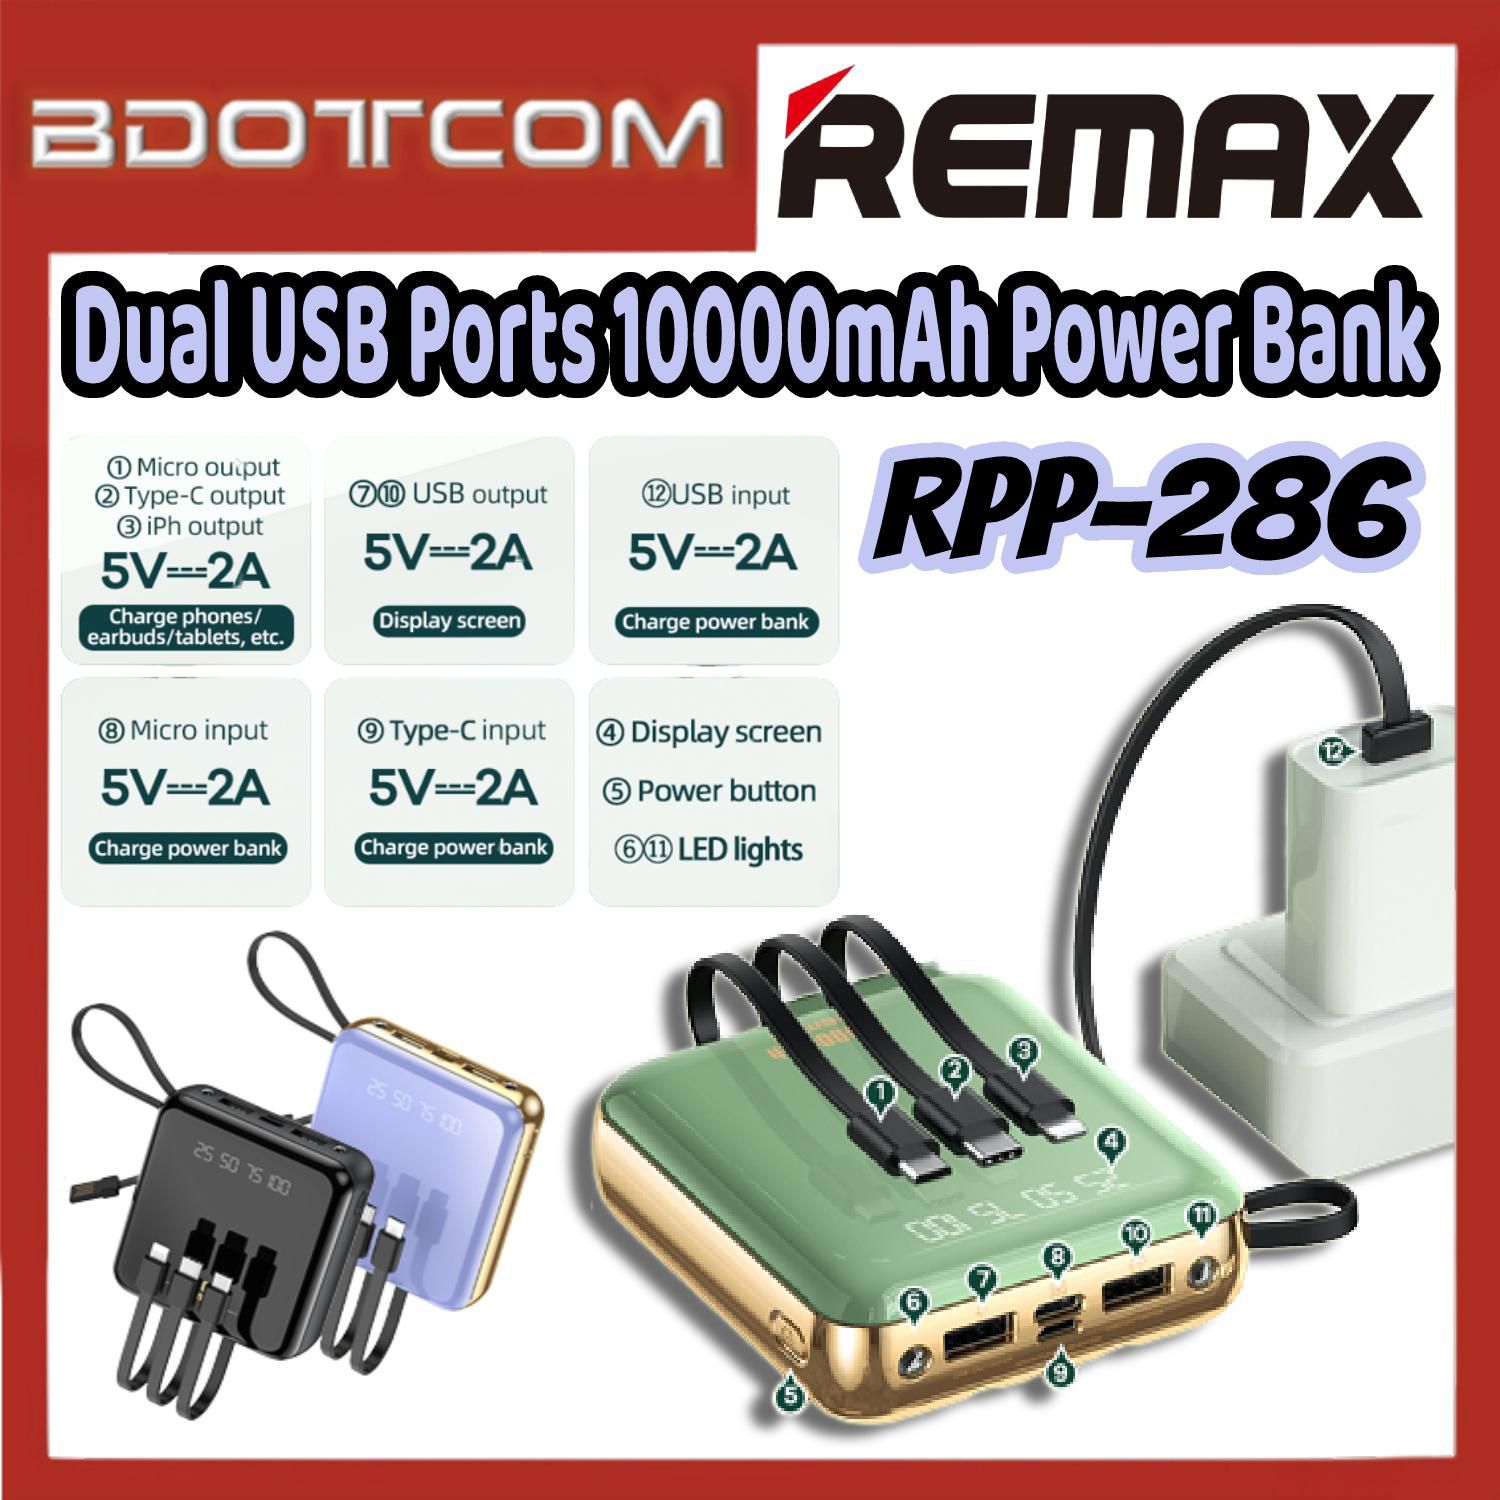 Remax RPP-286 Janker Series Dual USB Ports 10000mAh Power Bank (Black)